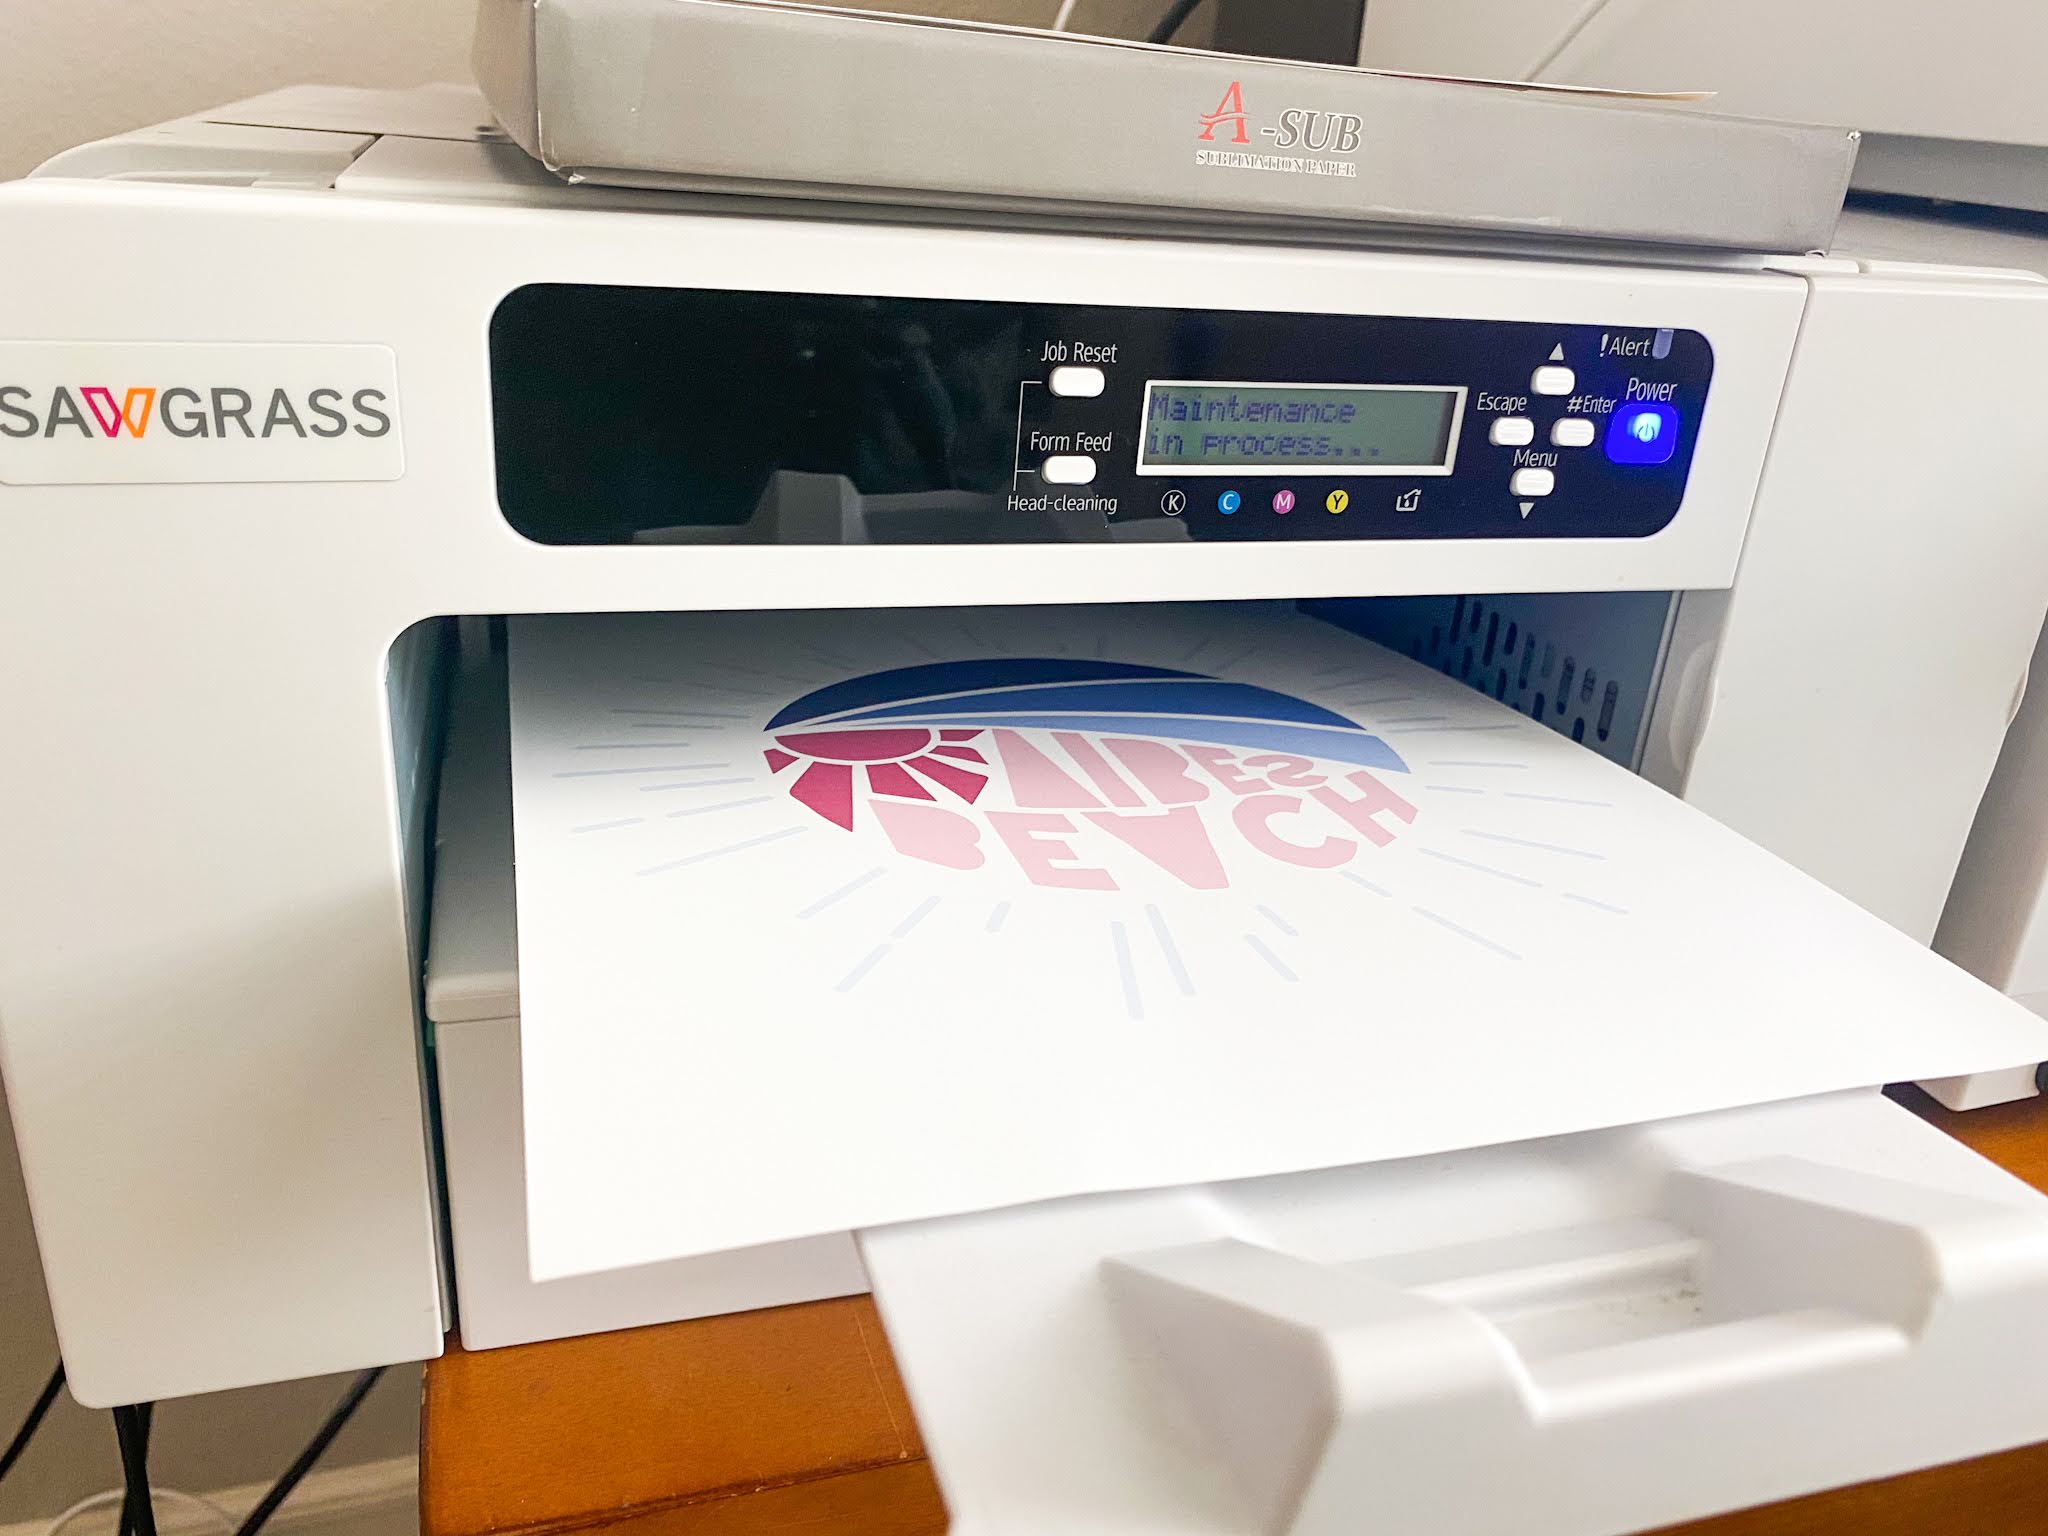 Choosing the Best Dye Sublimation Printer - dye sublimation printer